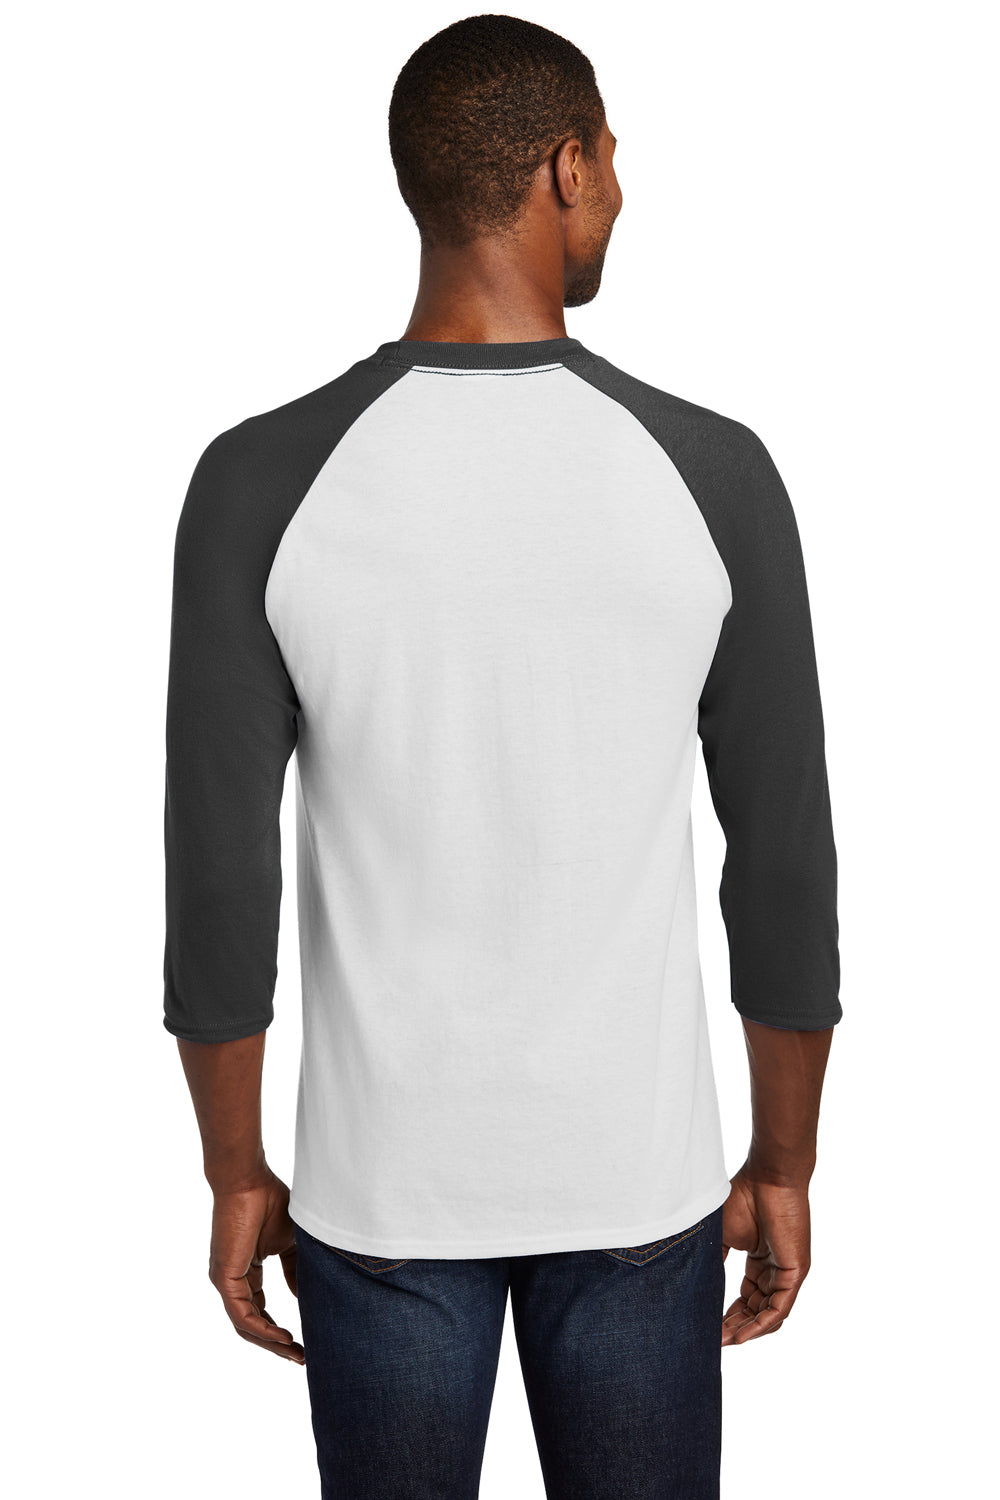 Port & Company PC55RS Mens Core Moisture Wicking 3/4 Sleeve Crewneck T-Shirt White/Black Back